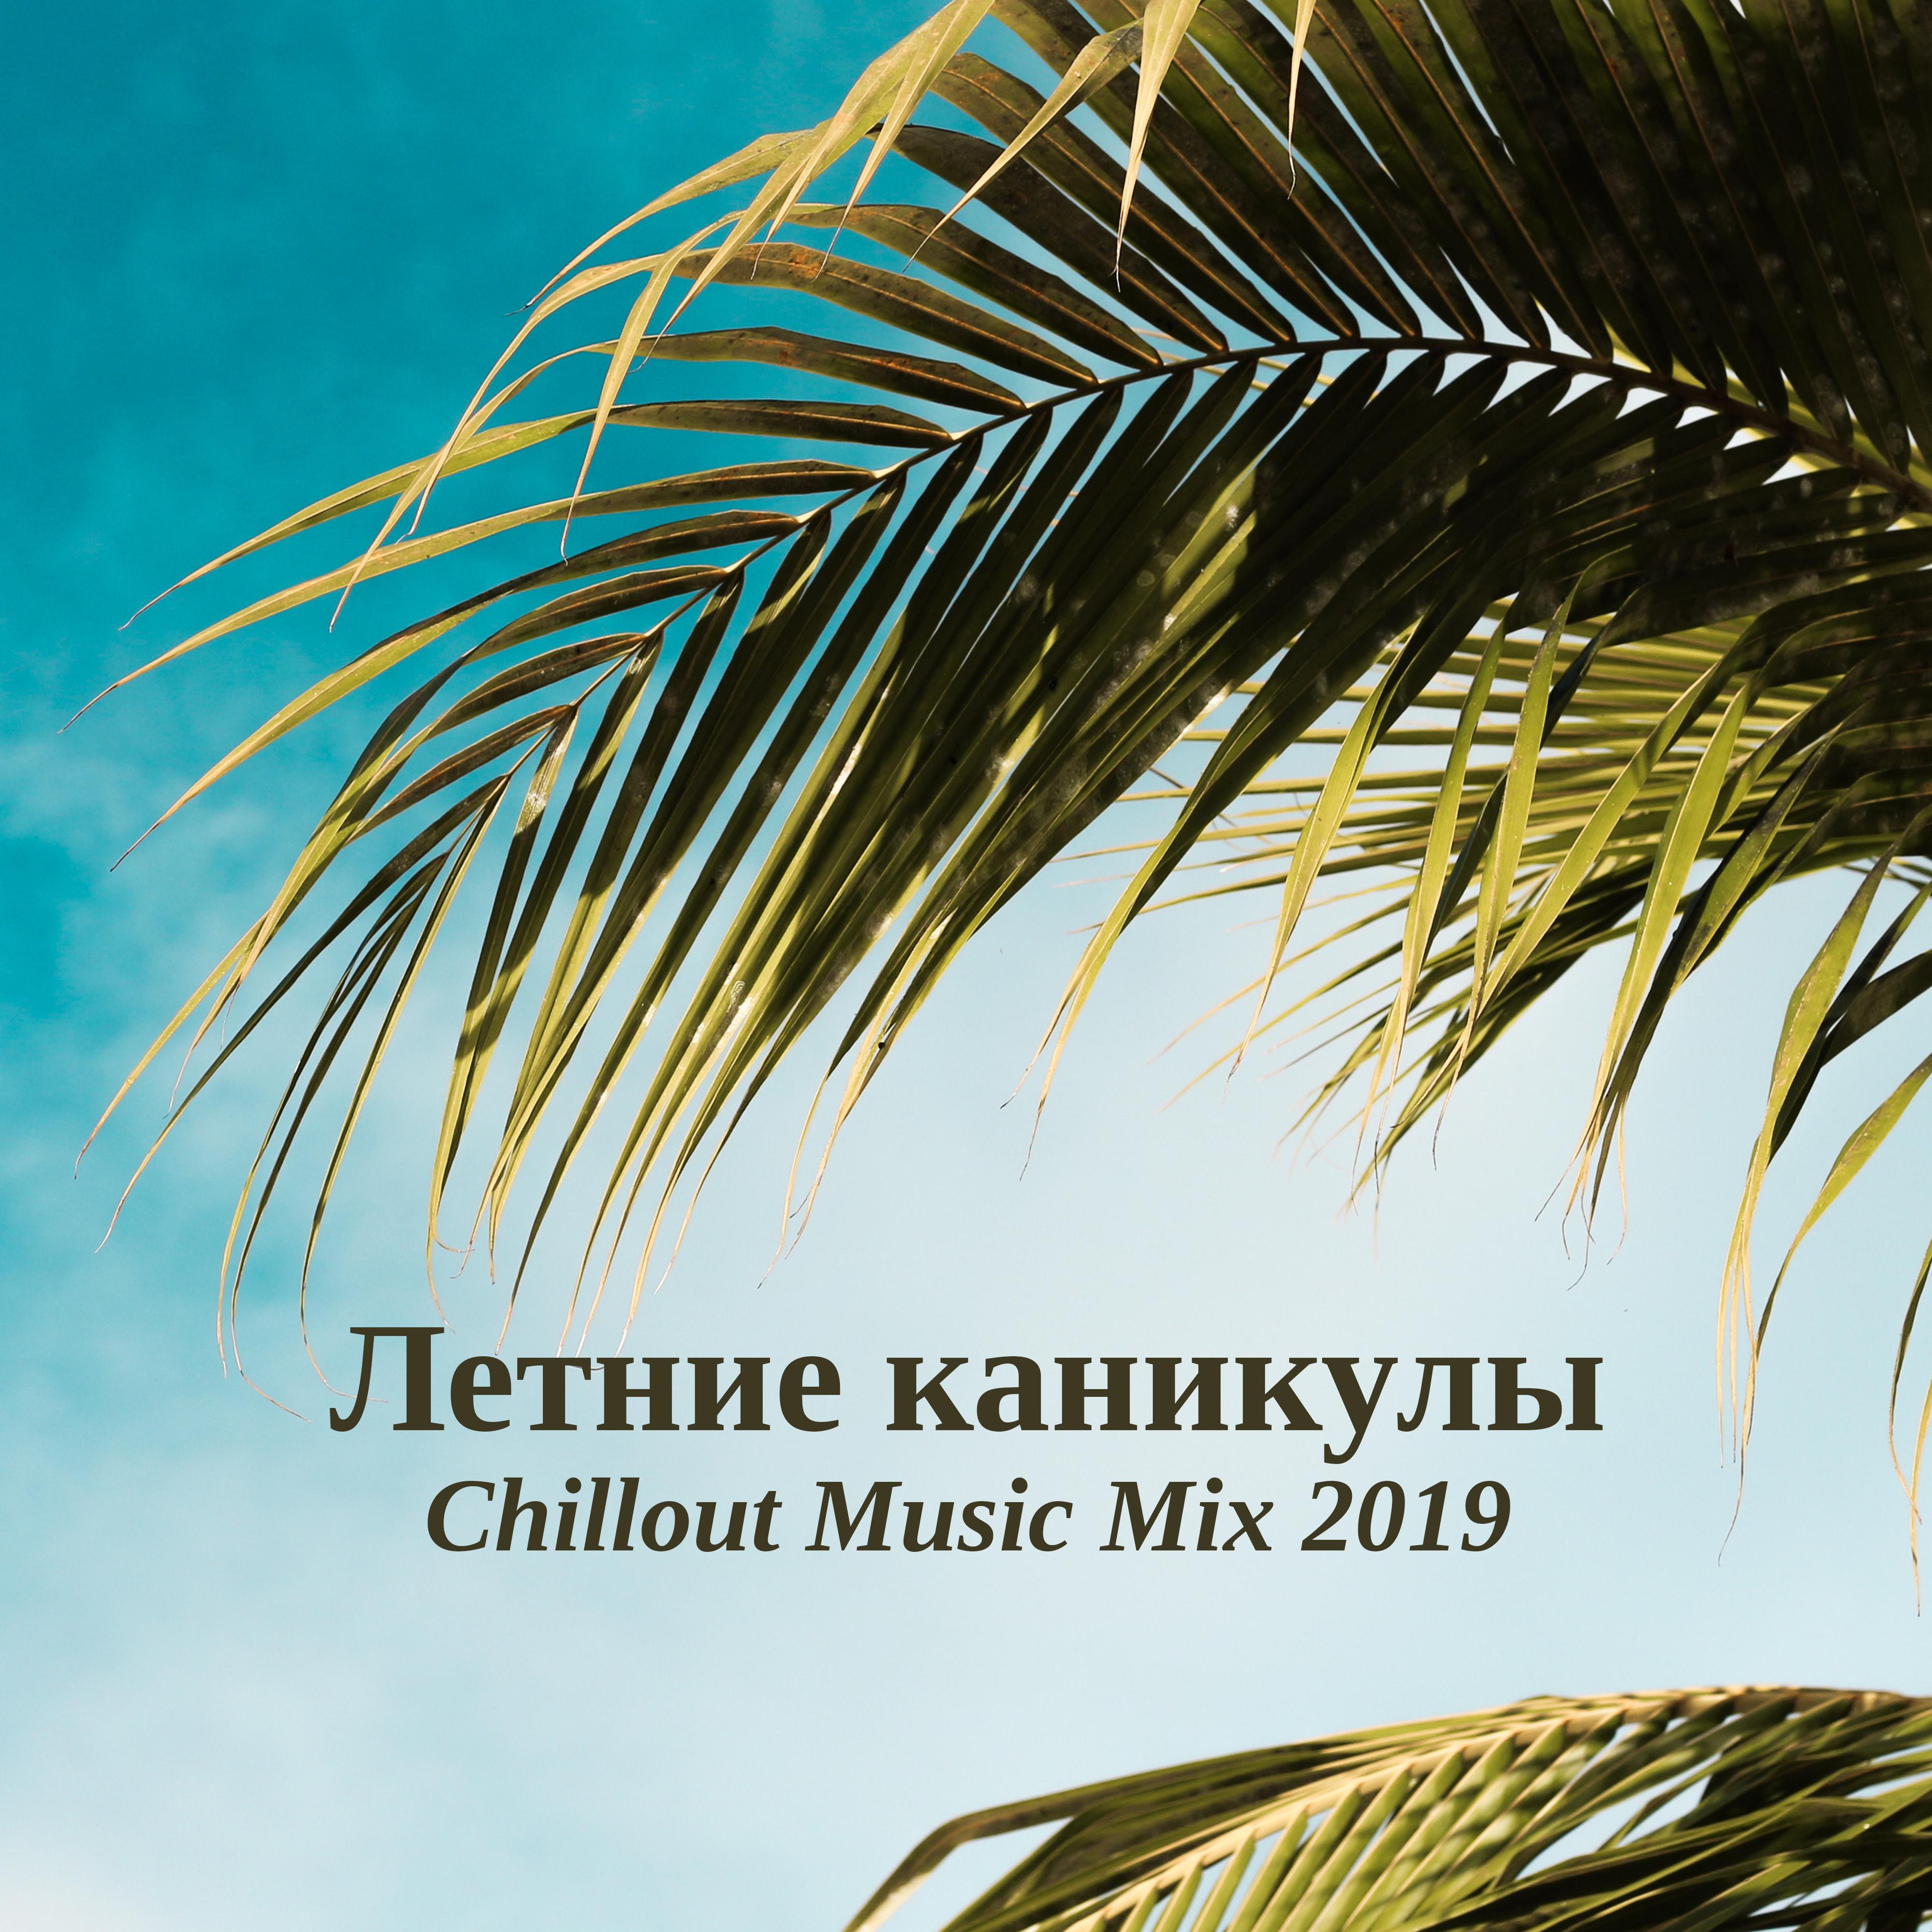 Chillout Music Mix 2019